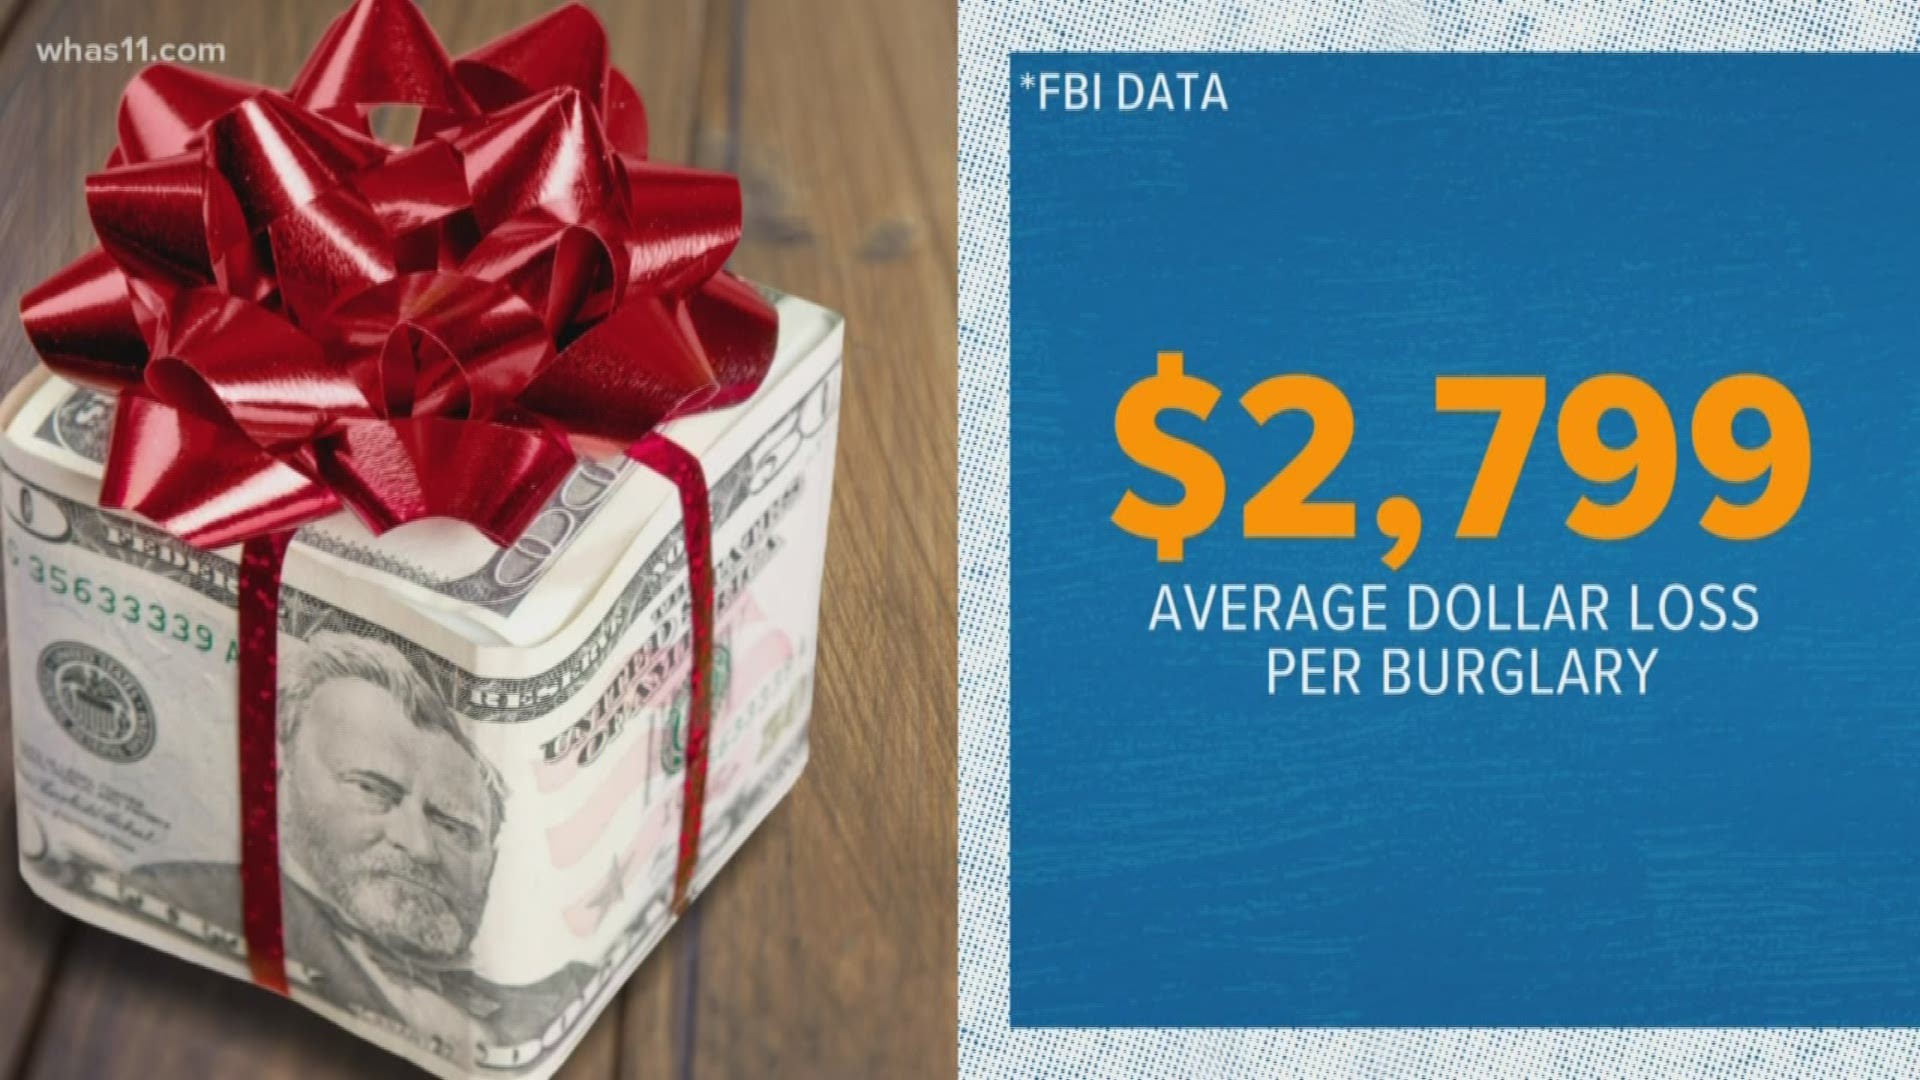 The average dollar loss per burglary last year was just under $28,000.